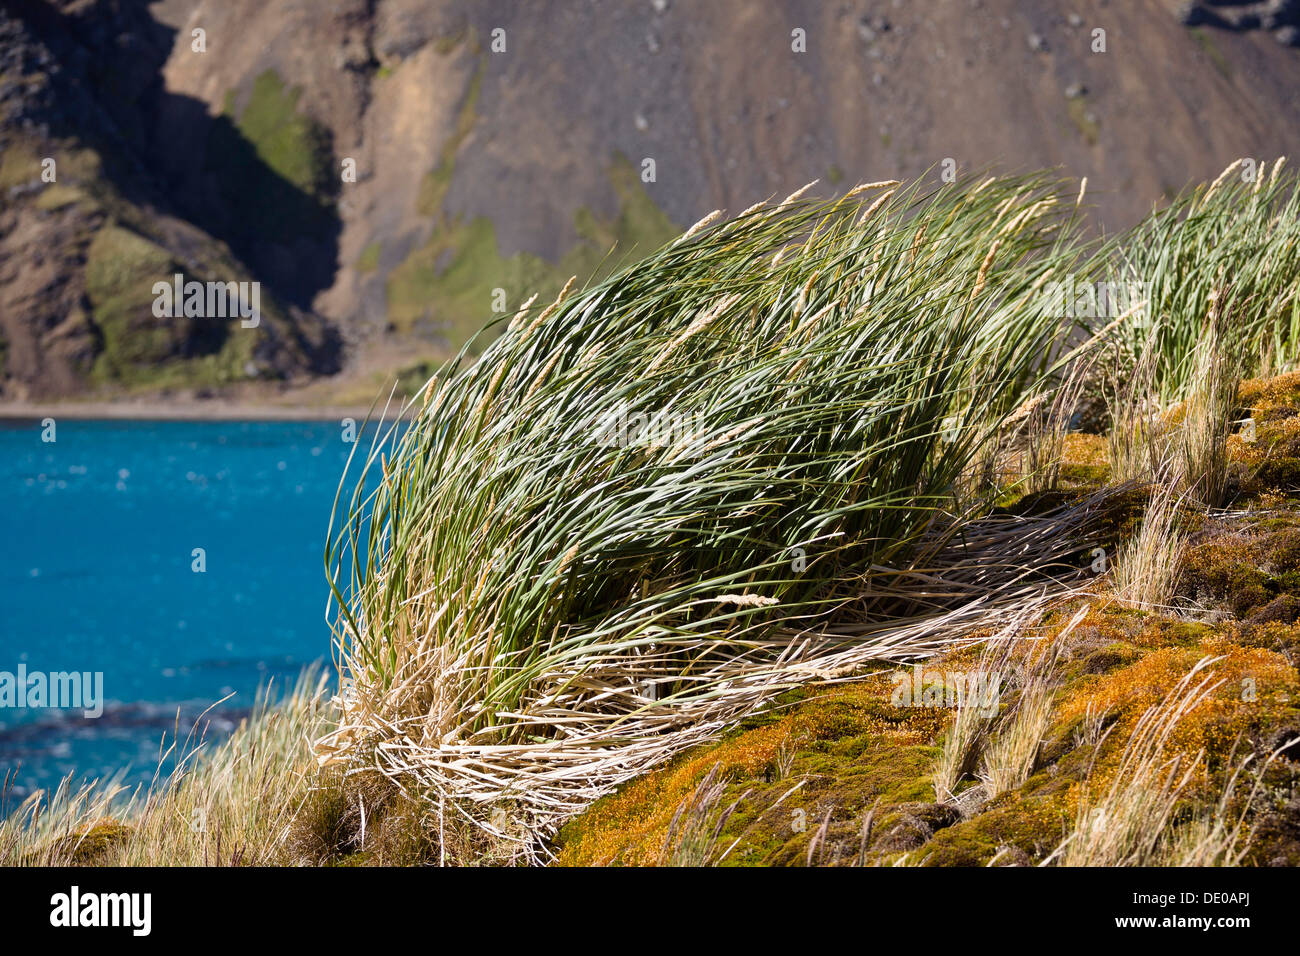 Tussock-grass, Grytviken, King Edward Cove, South Georgia, South Sandwich Islands, British Overseas Territory, Subantarctic Stock Photo